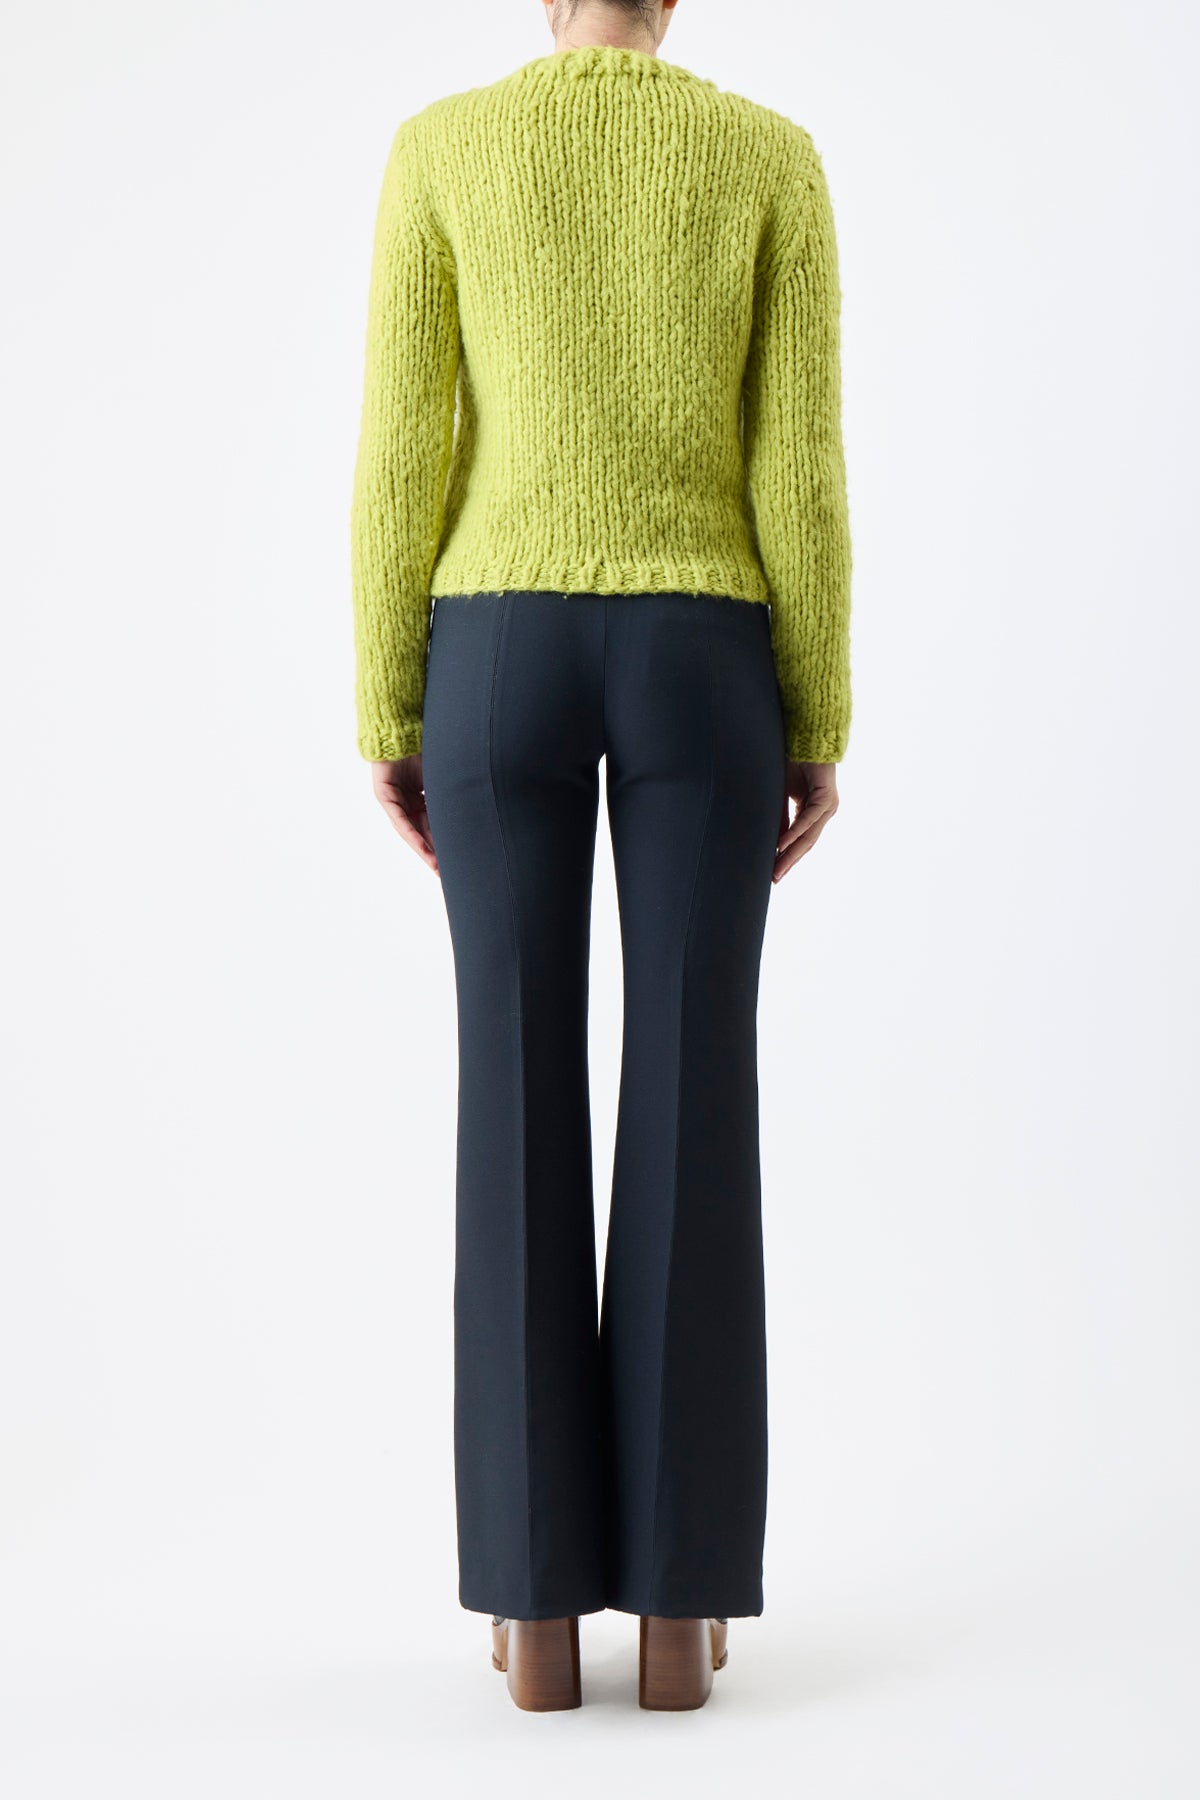 Dalton Knit Sweater in Lime Adamite Welfat Cashmere